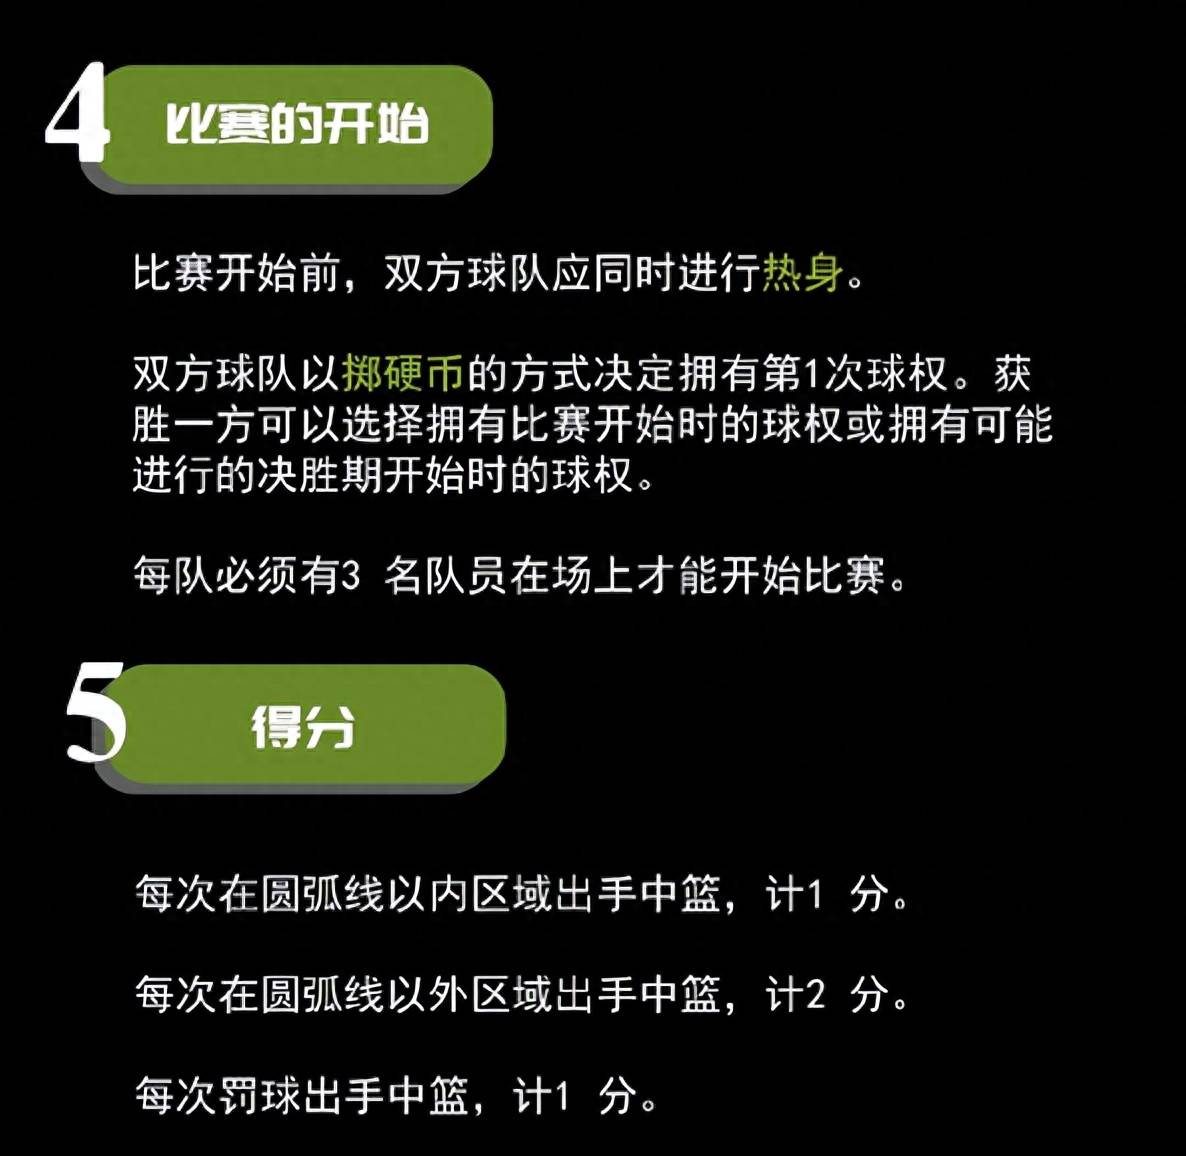 fiba open 3×3 广东省深圳市三人篮球公开赛报名开始!